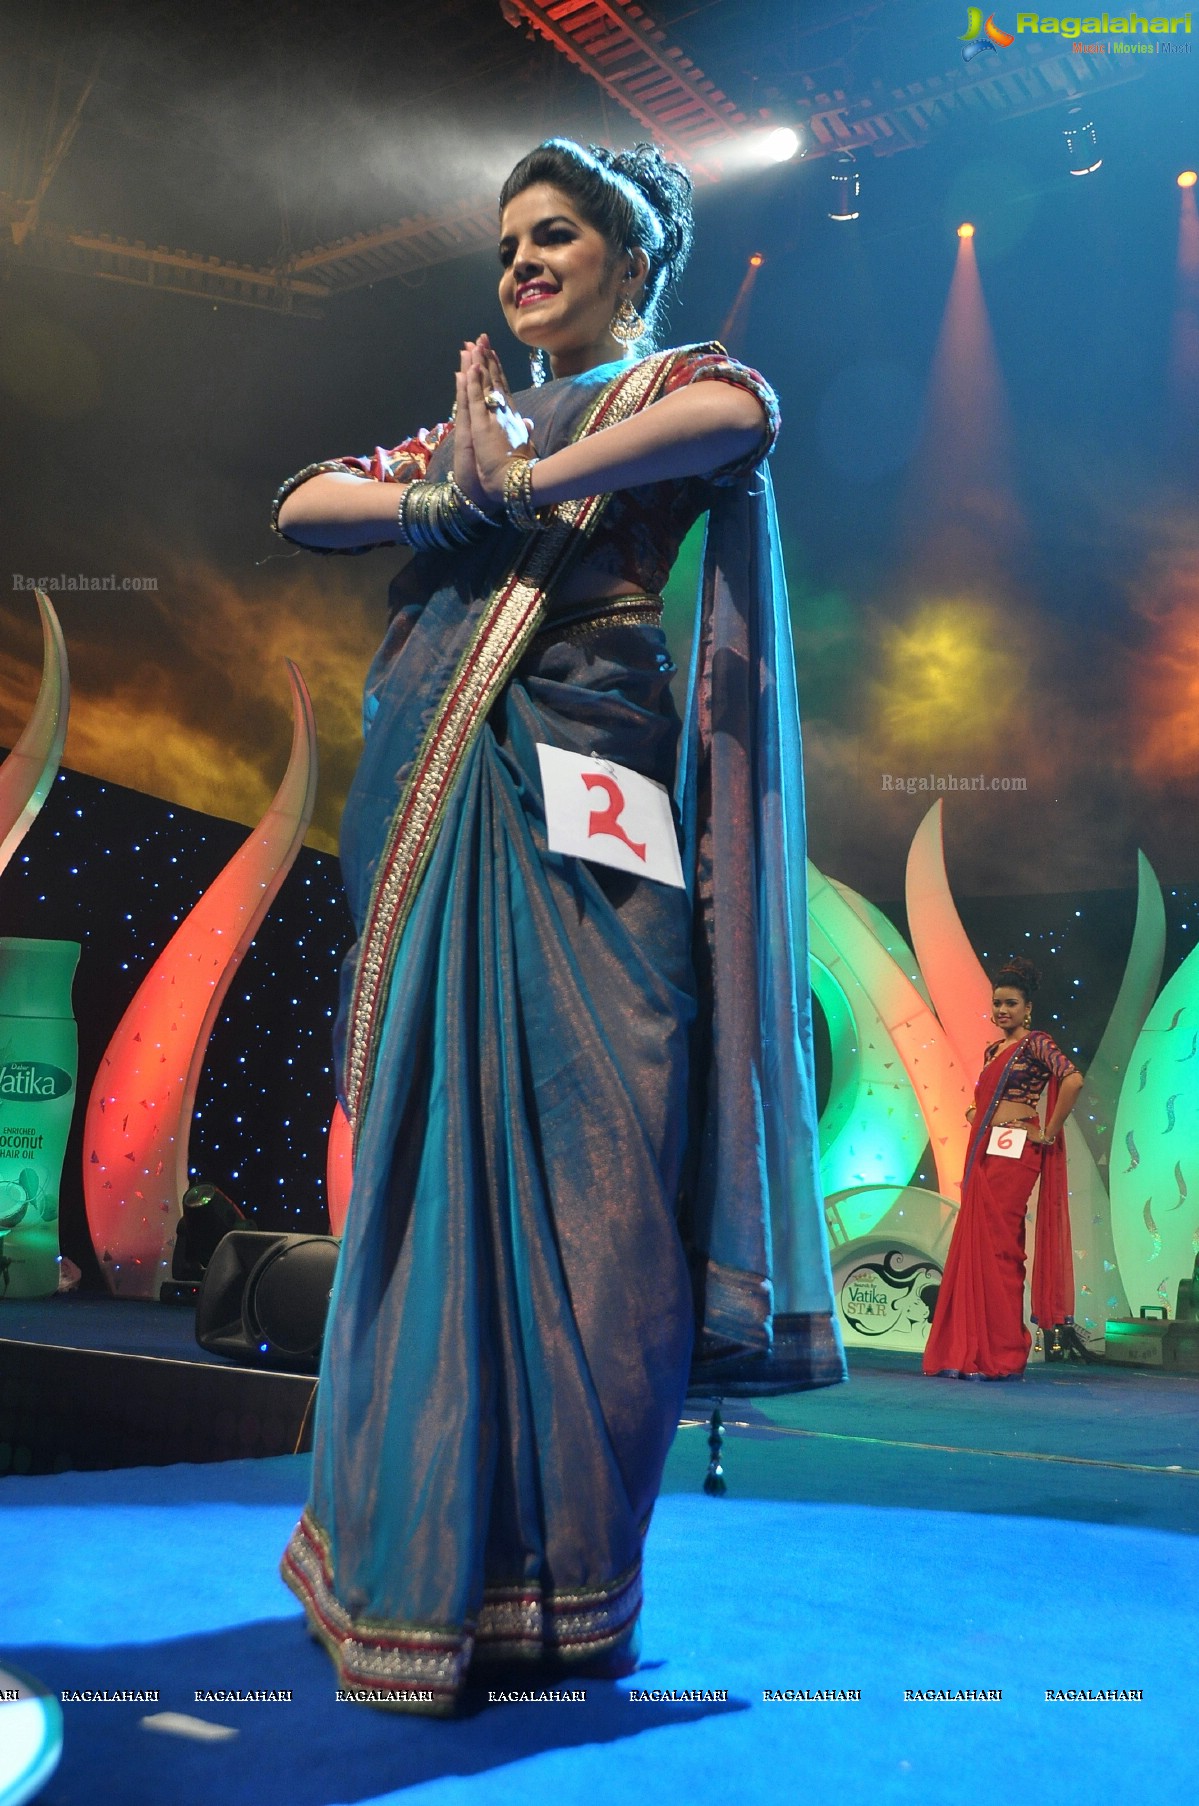 Dabur Vatika Star Contest 2012 Grand Finale